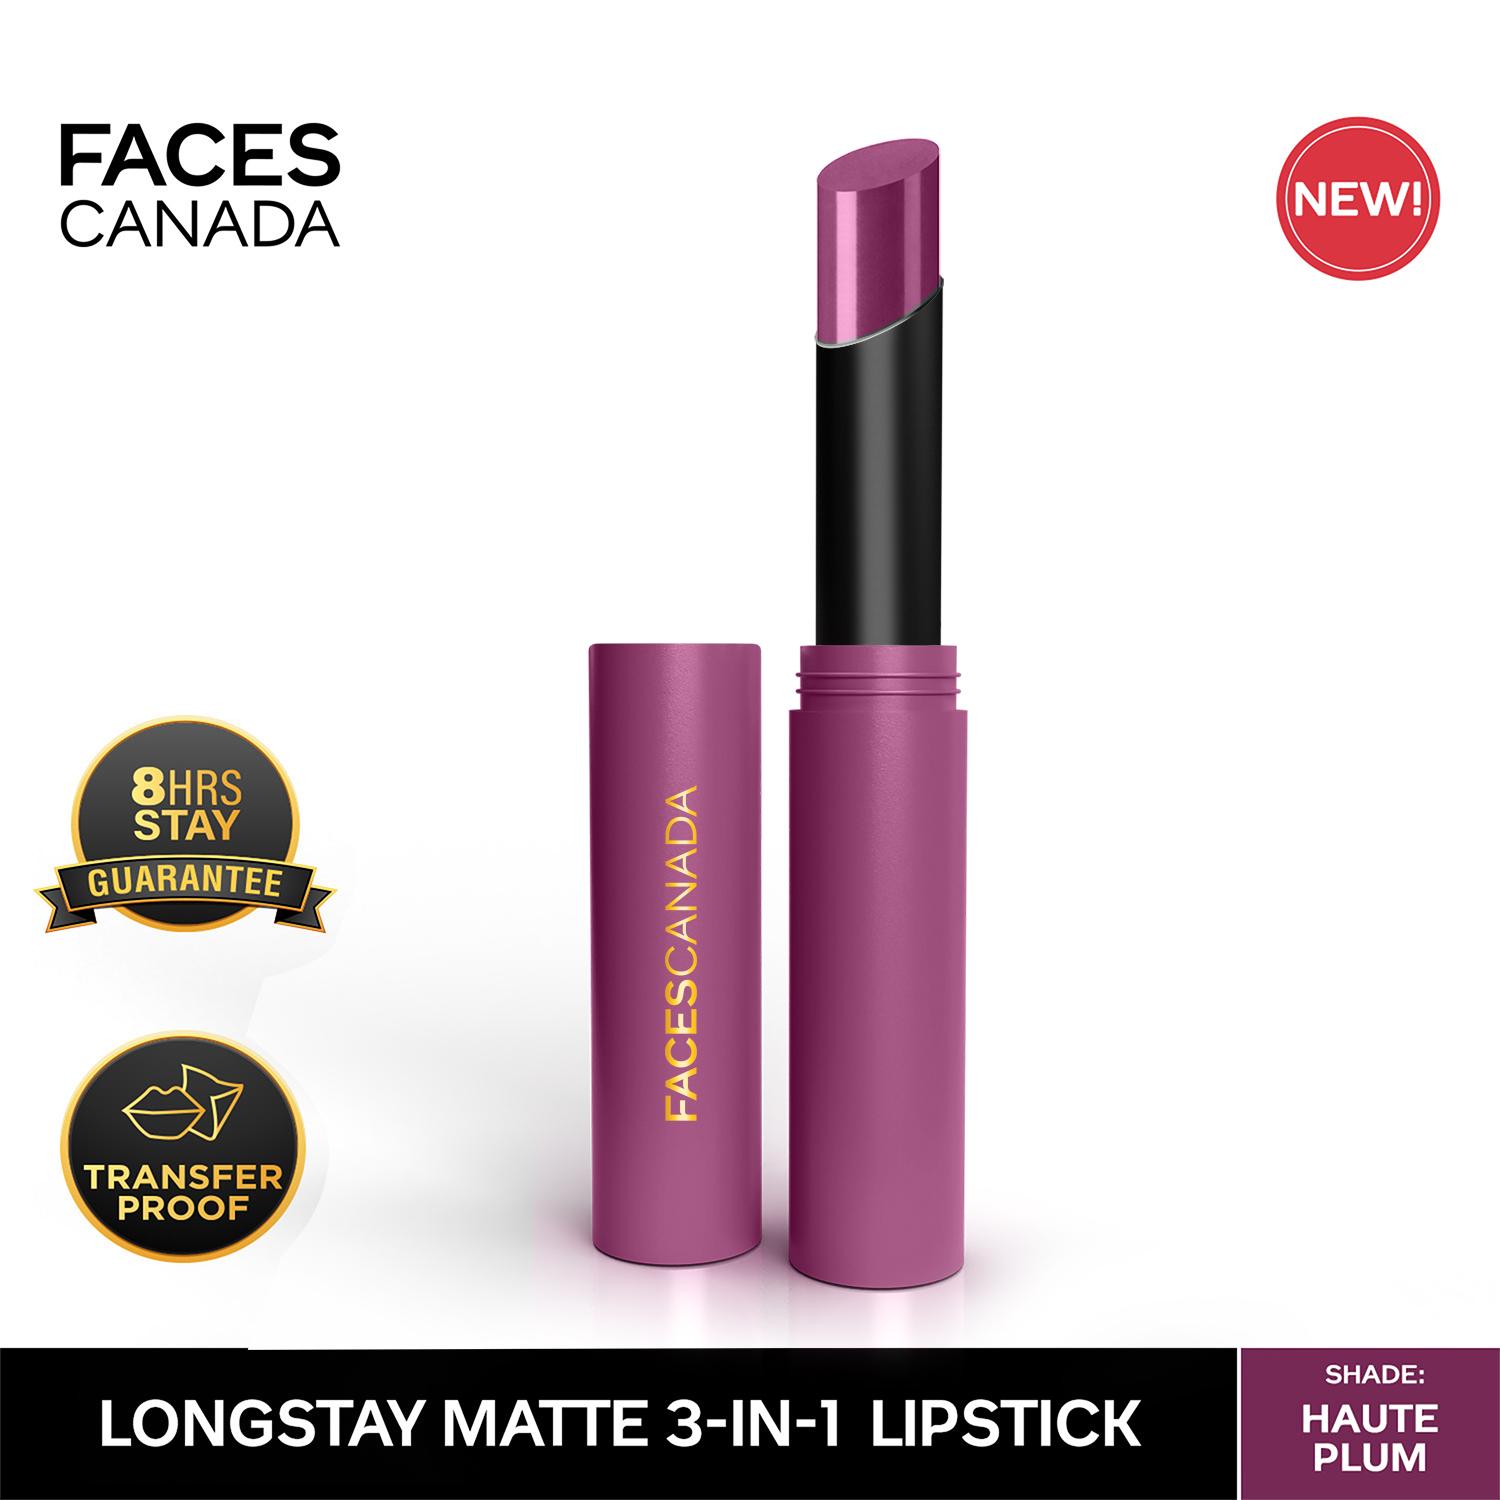 Faces Canada | Faces Canada 3-In-1 Long Stay Matte Lipstick - 08 Haute Plum (2g)